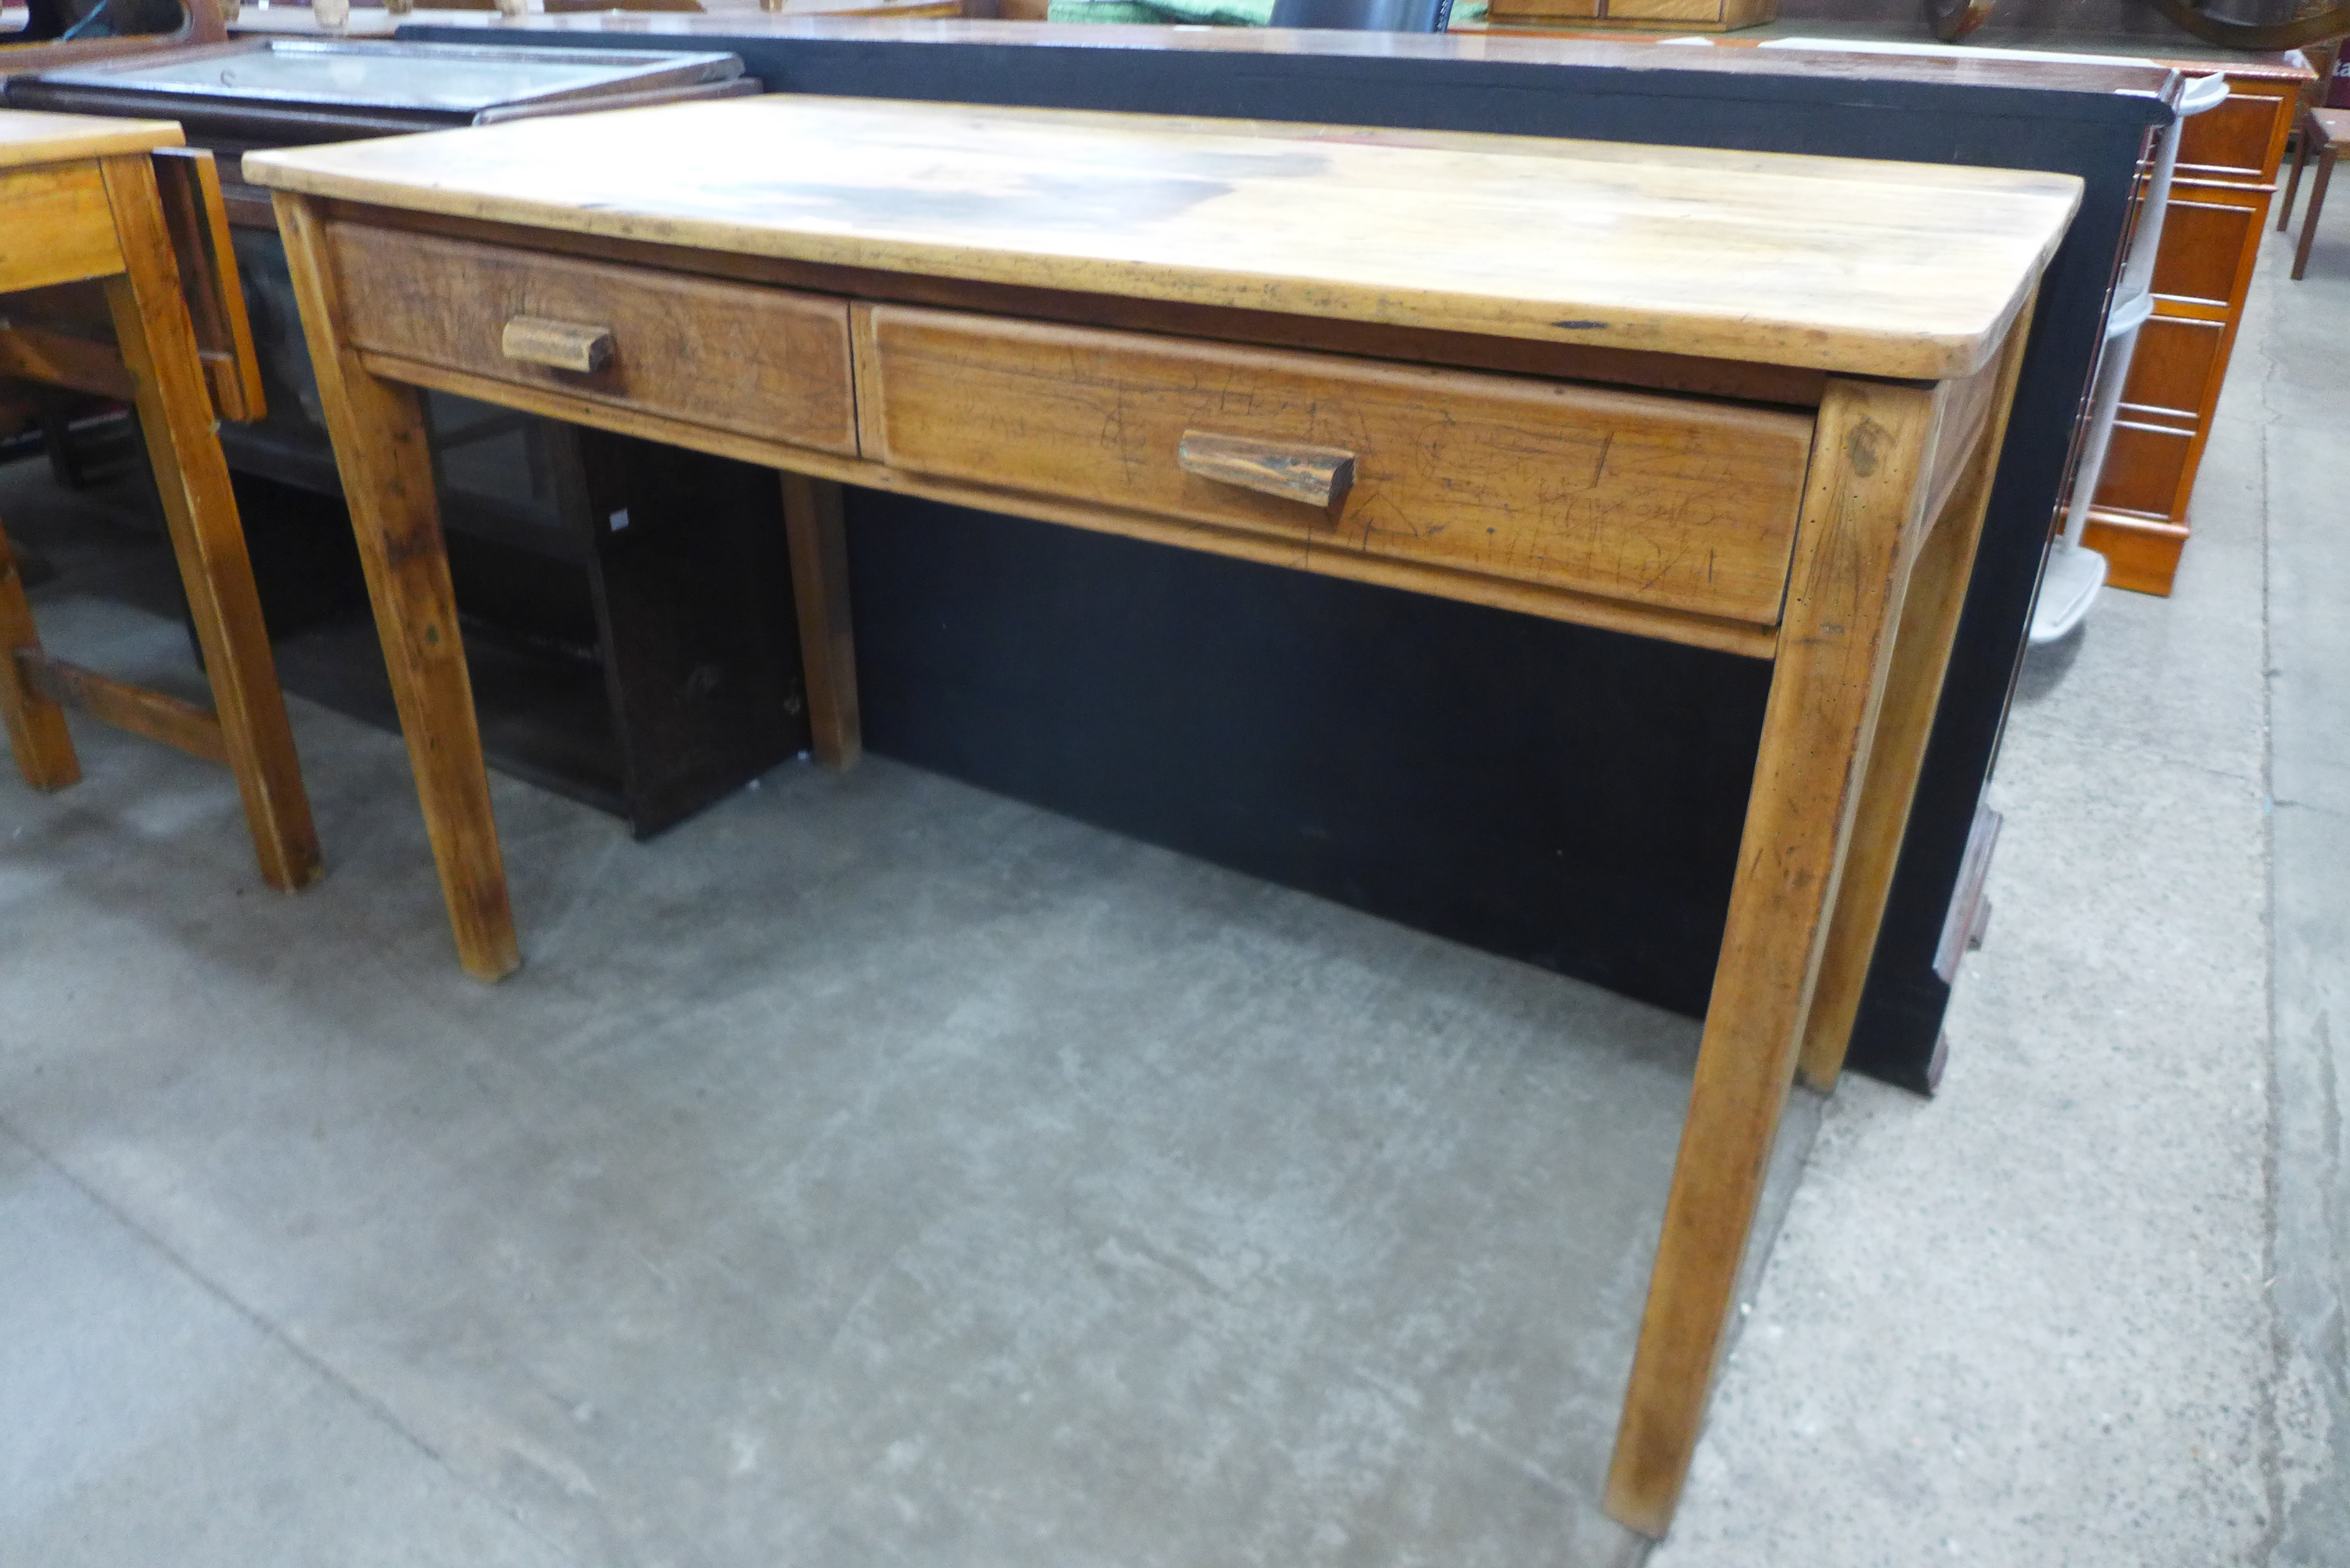 An oak and beech two drawer desk